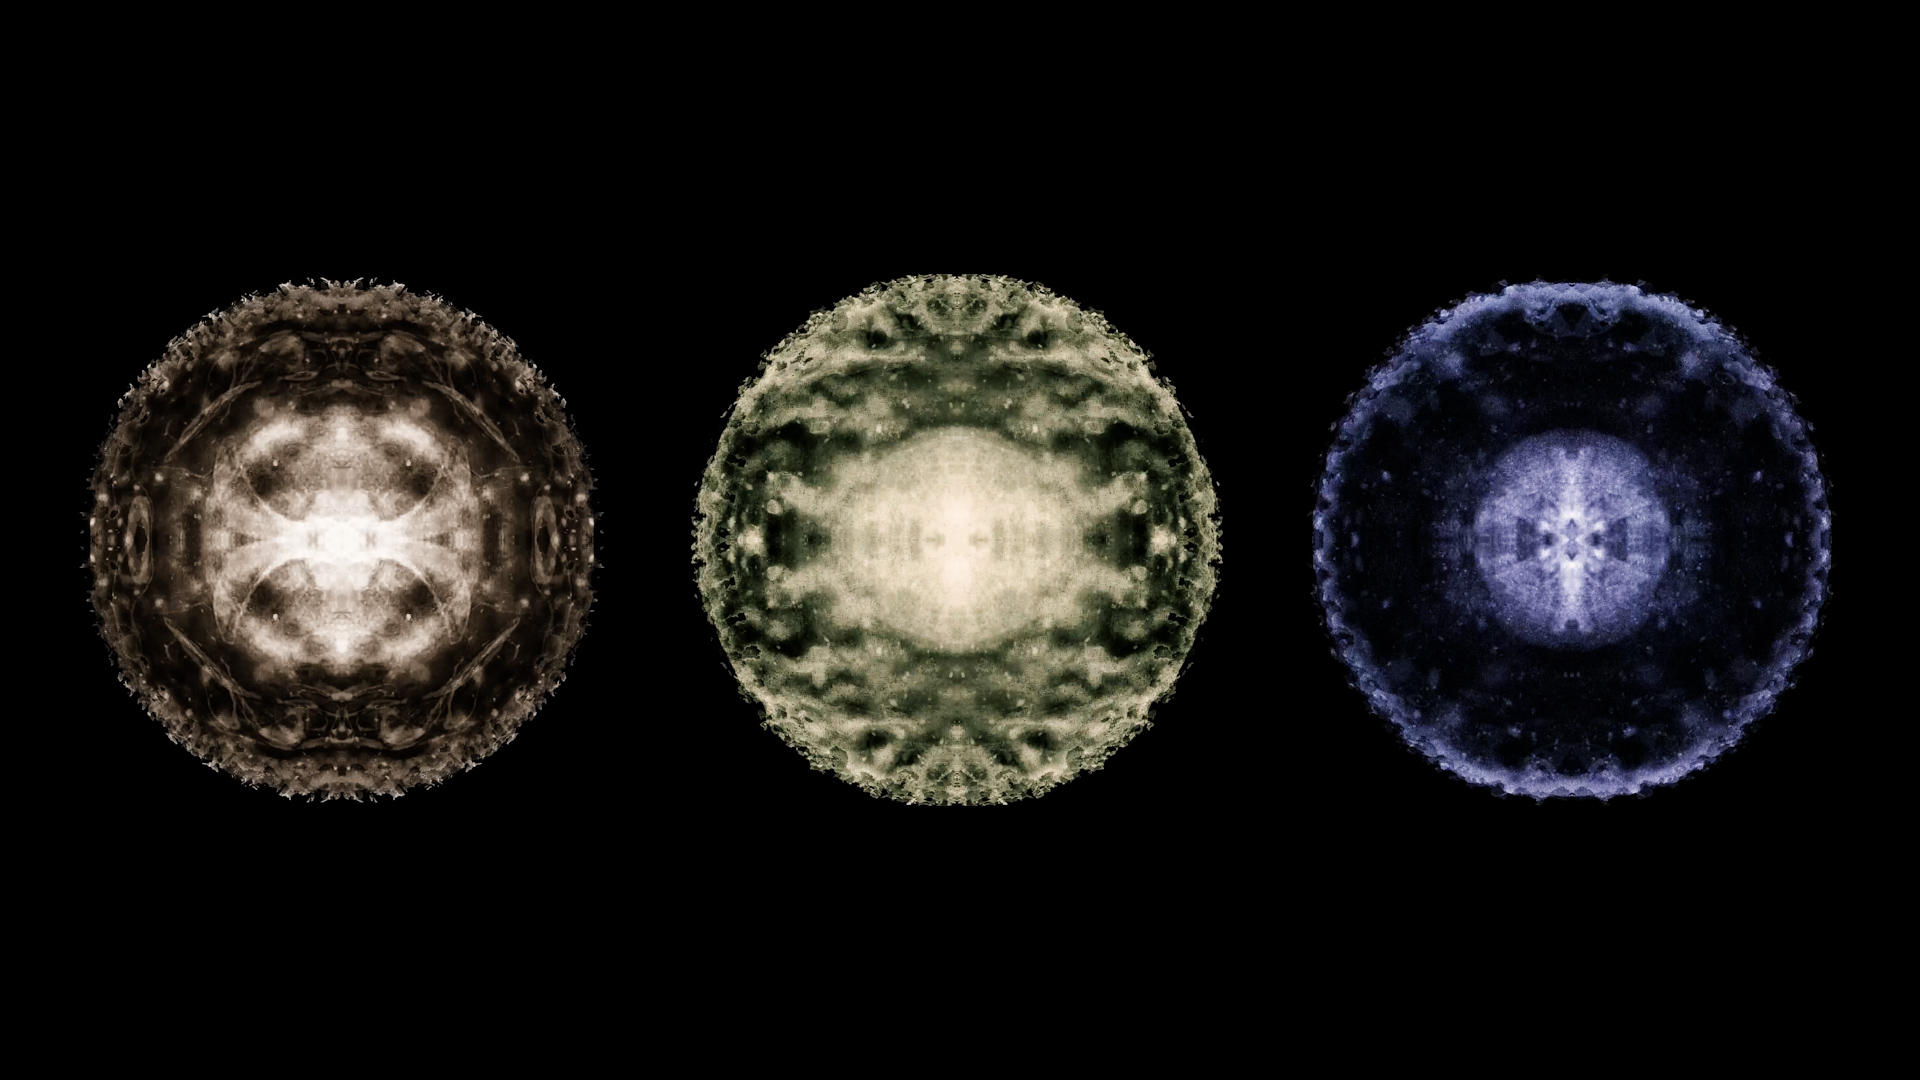 Still image from film showing three cymatics visual orb shapes.